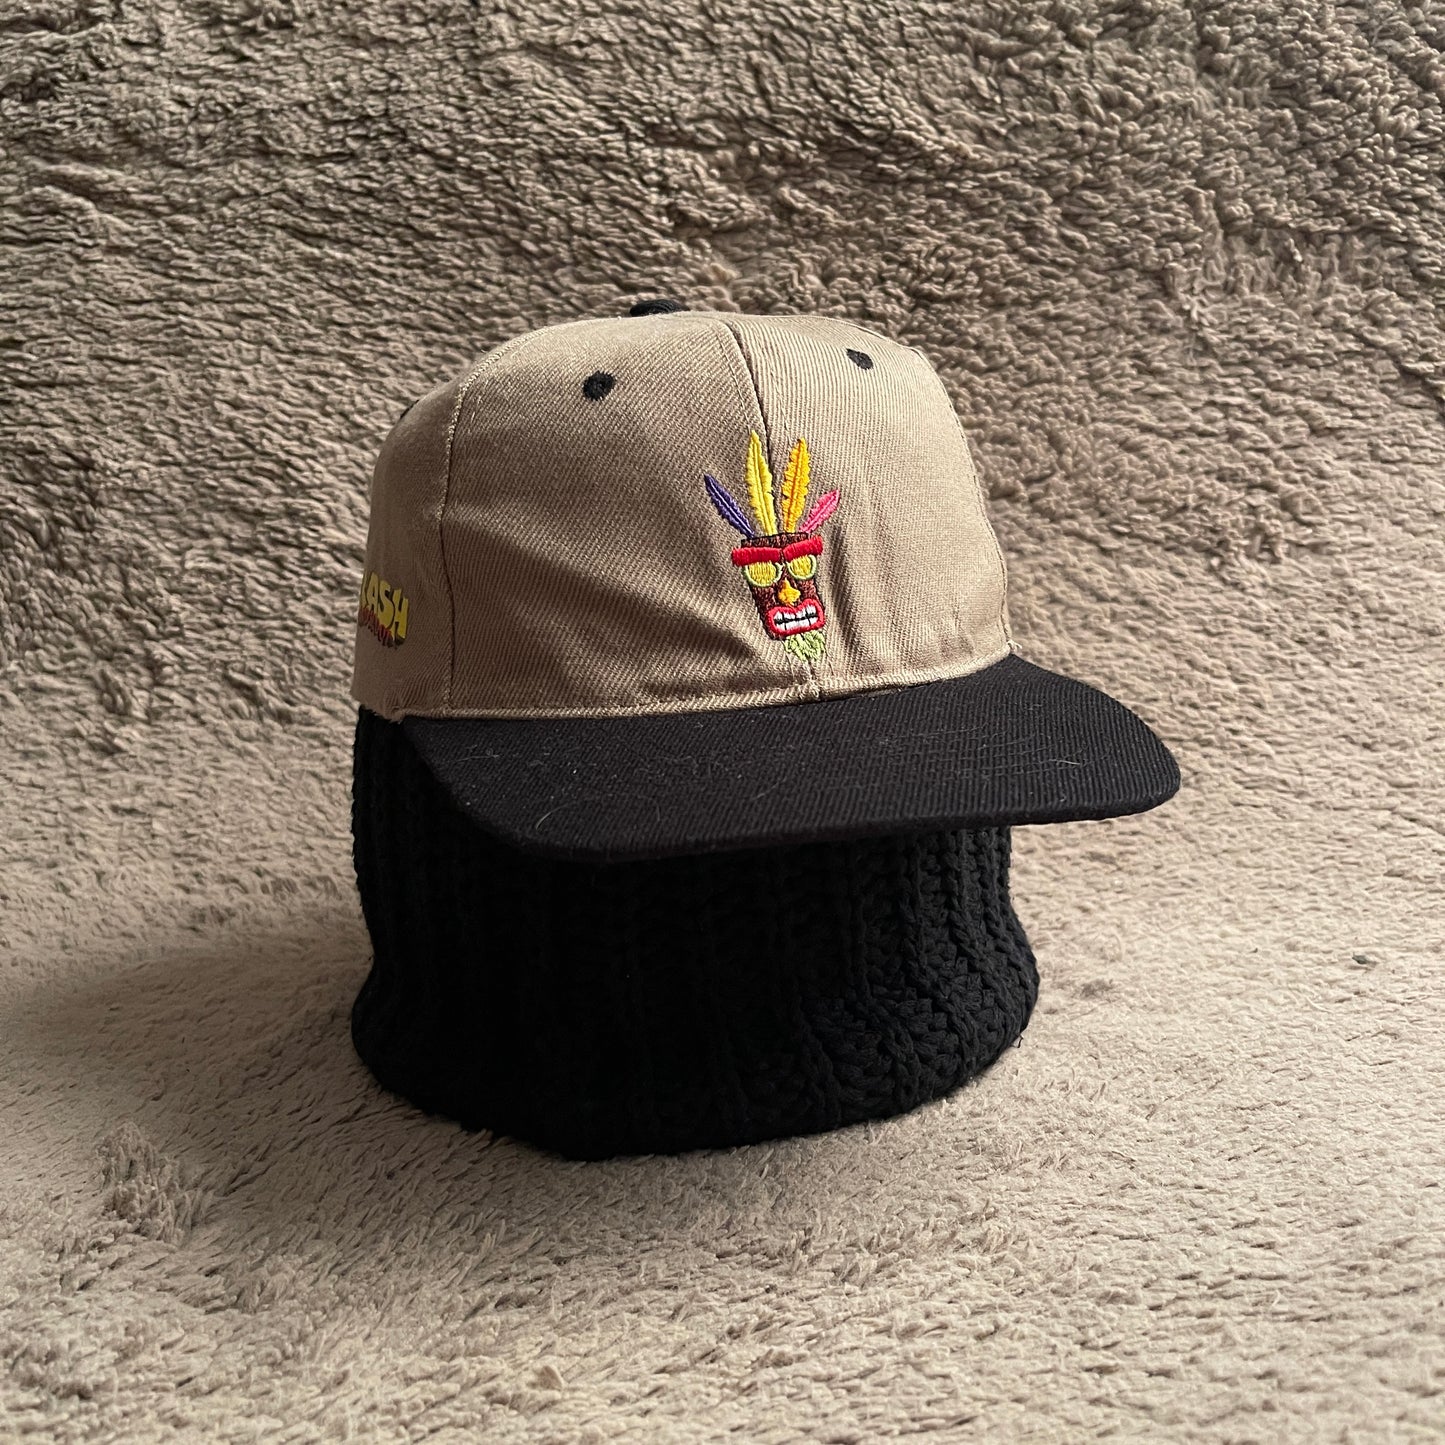 Crash Bandicoot Hat